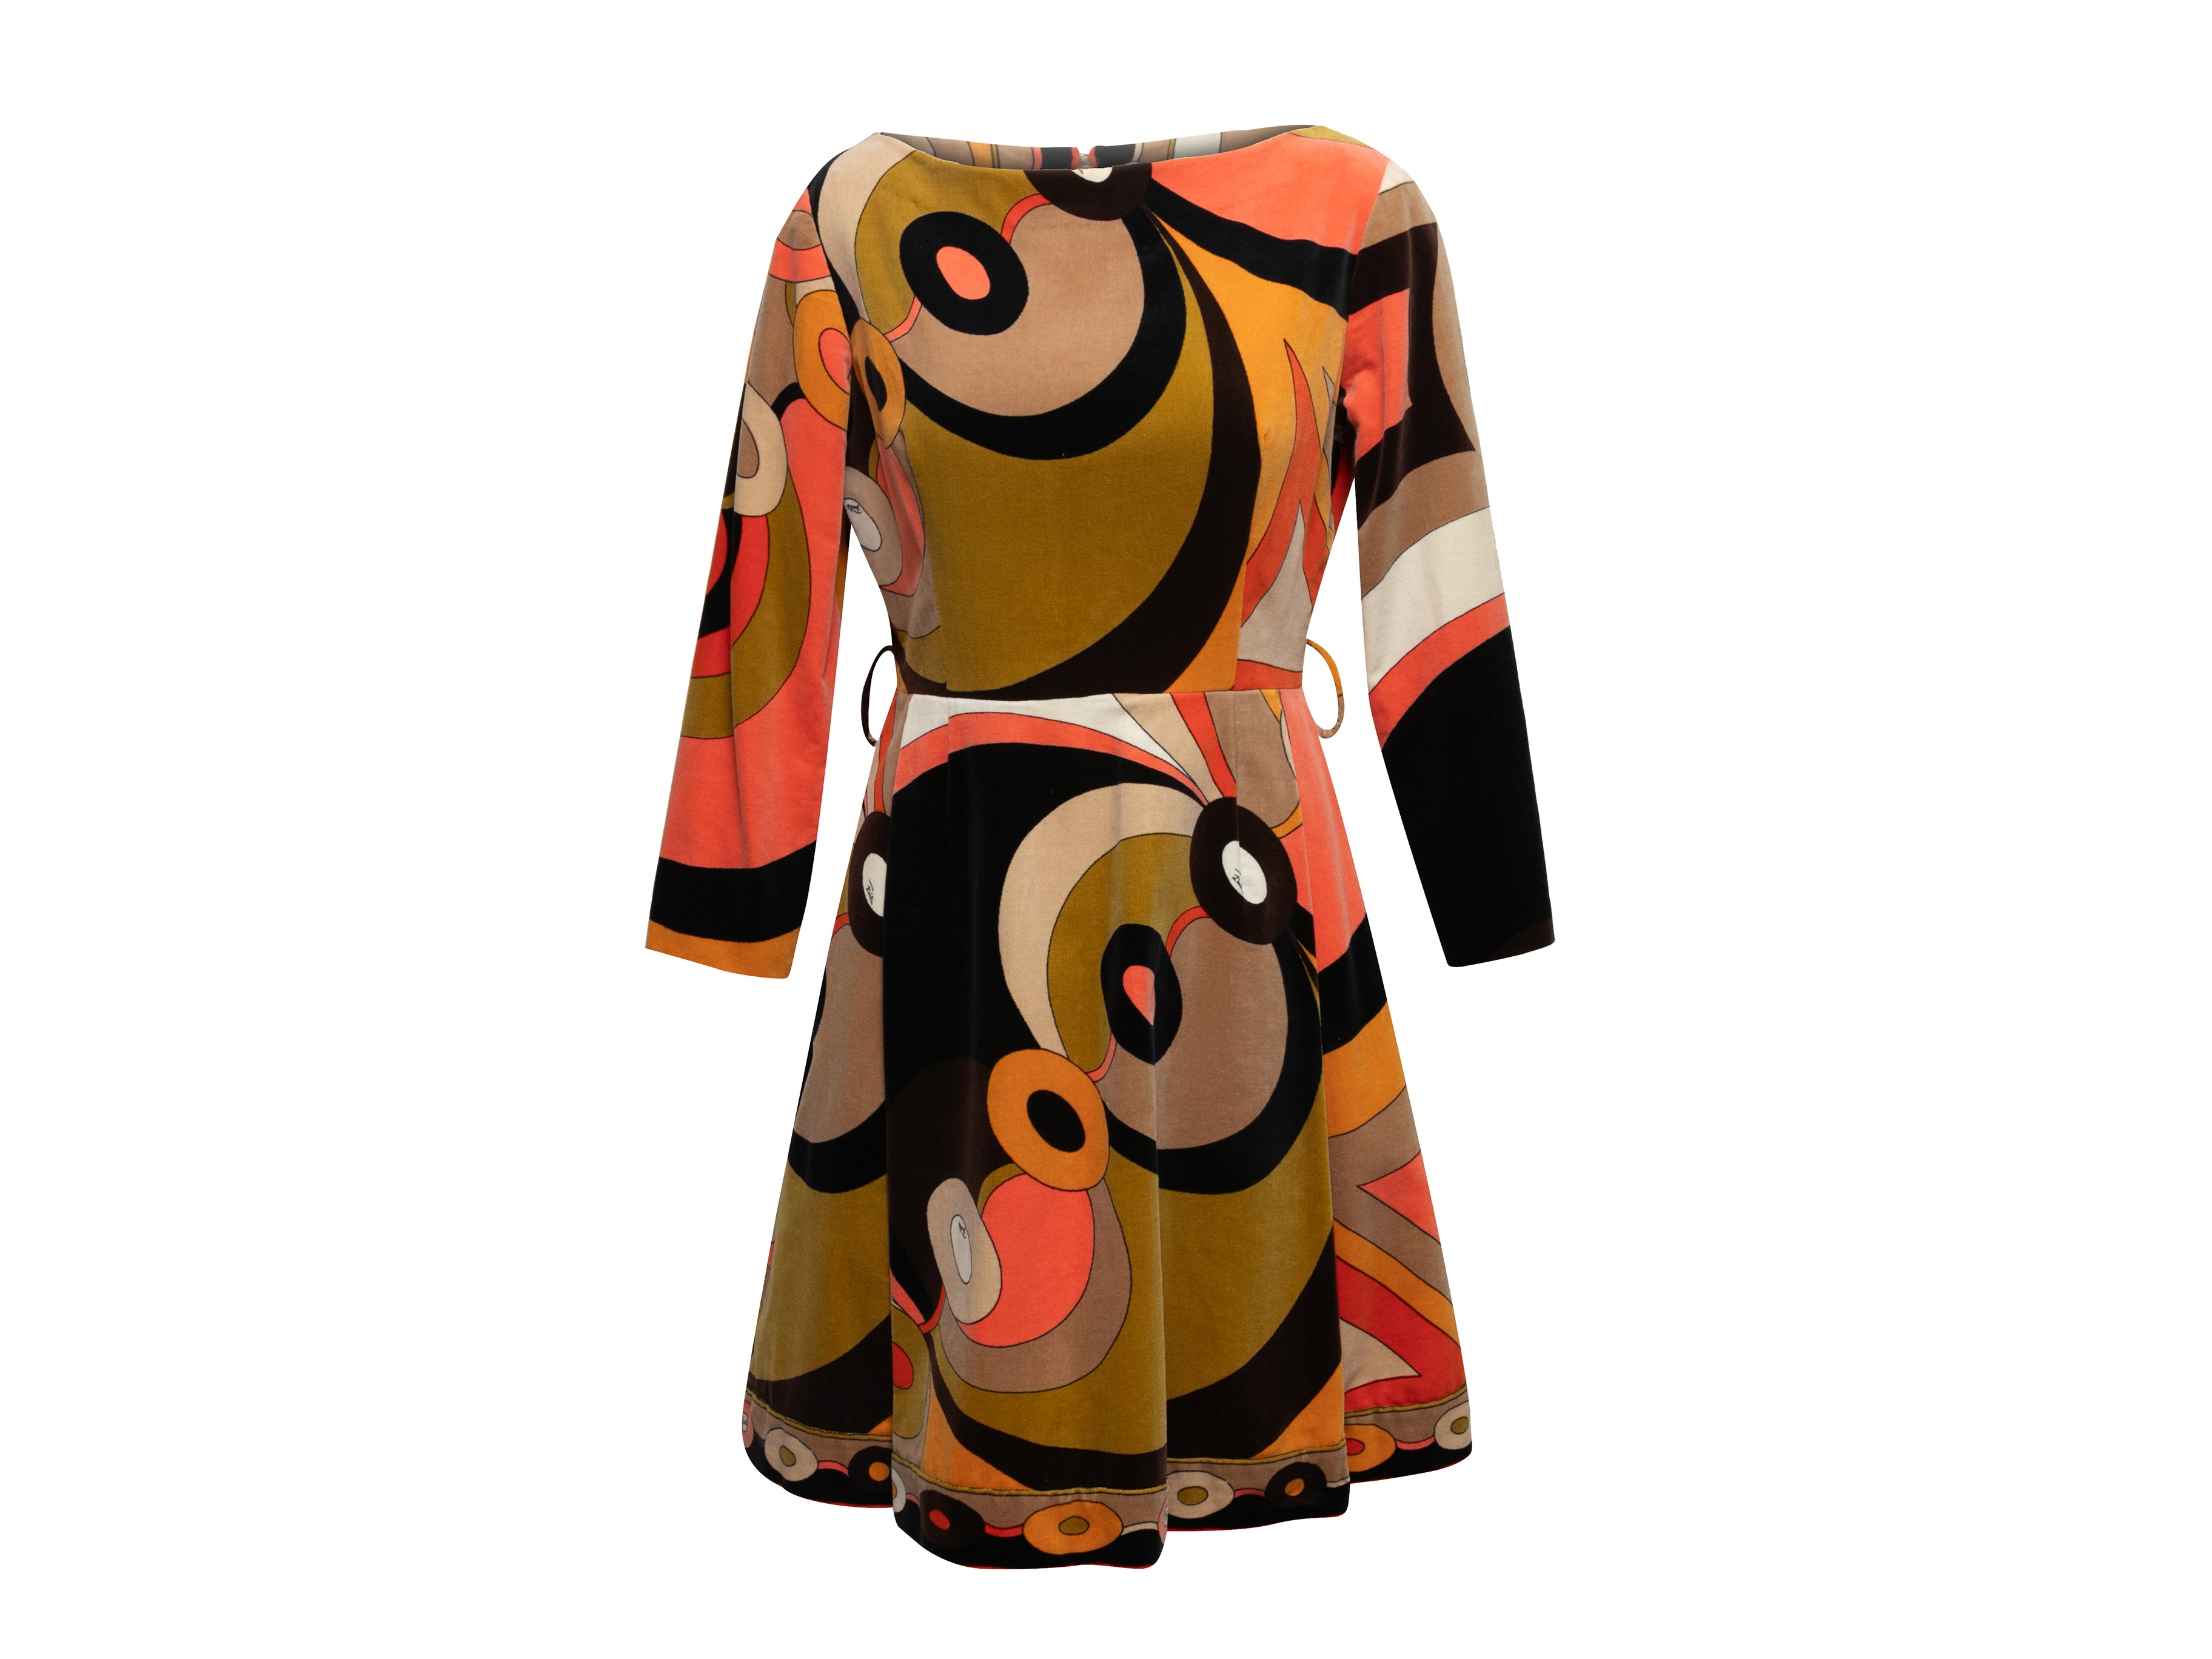 Vintage Black & Multicolor Emilio Pucci Velvet Abstract Print Dress Size US 14 - Designer Revival